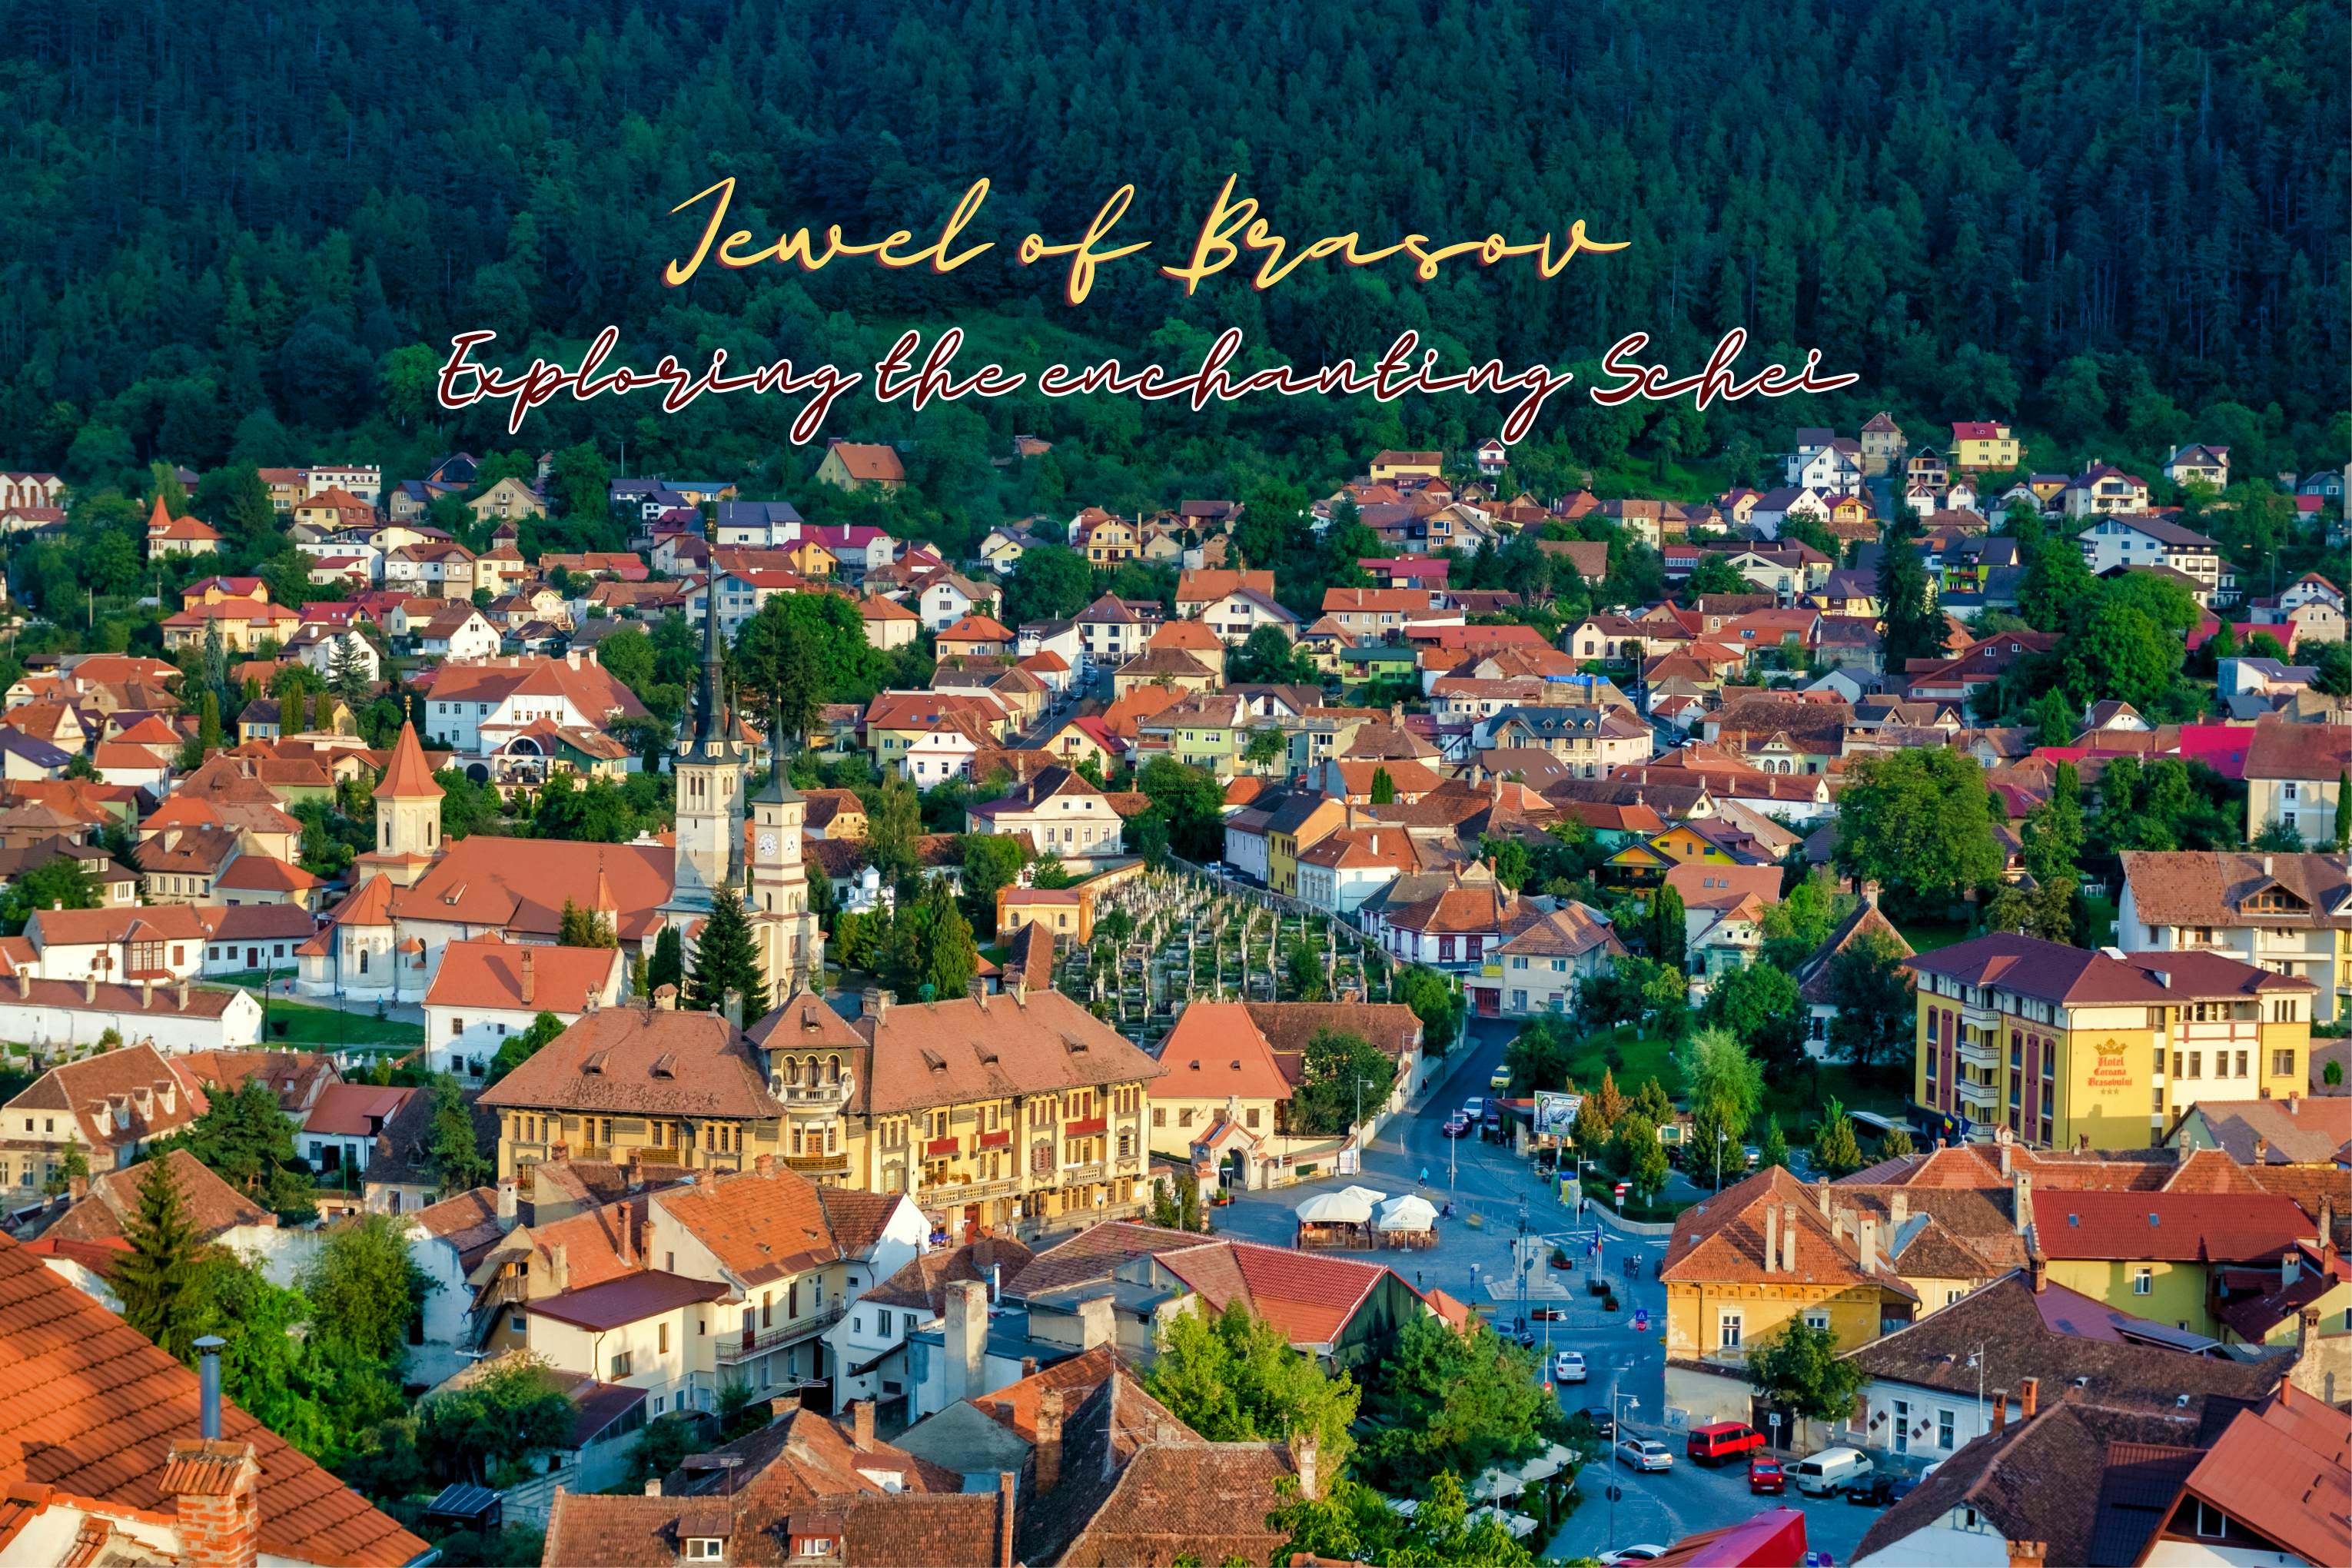 Jewel of Brasov: Exploring the Enchanting Schei image